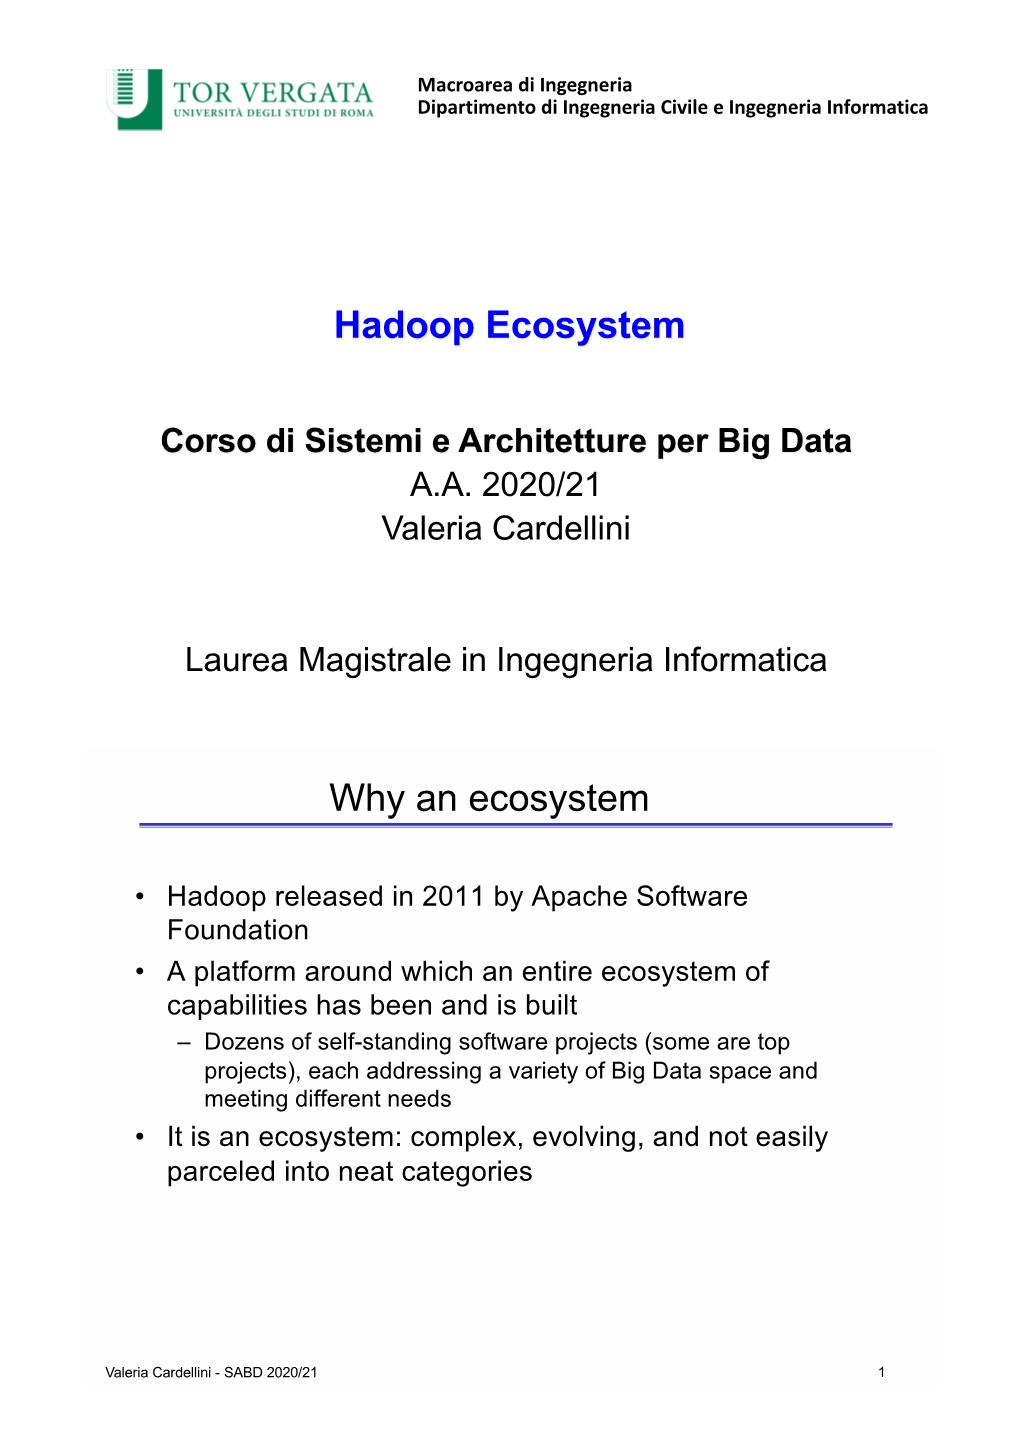 Hadoop Ecosystem Why an Ecosystem